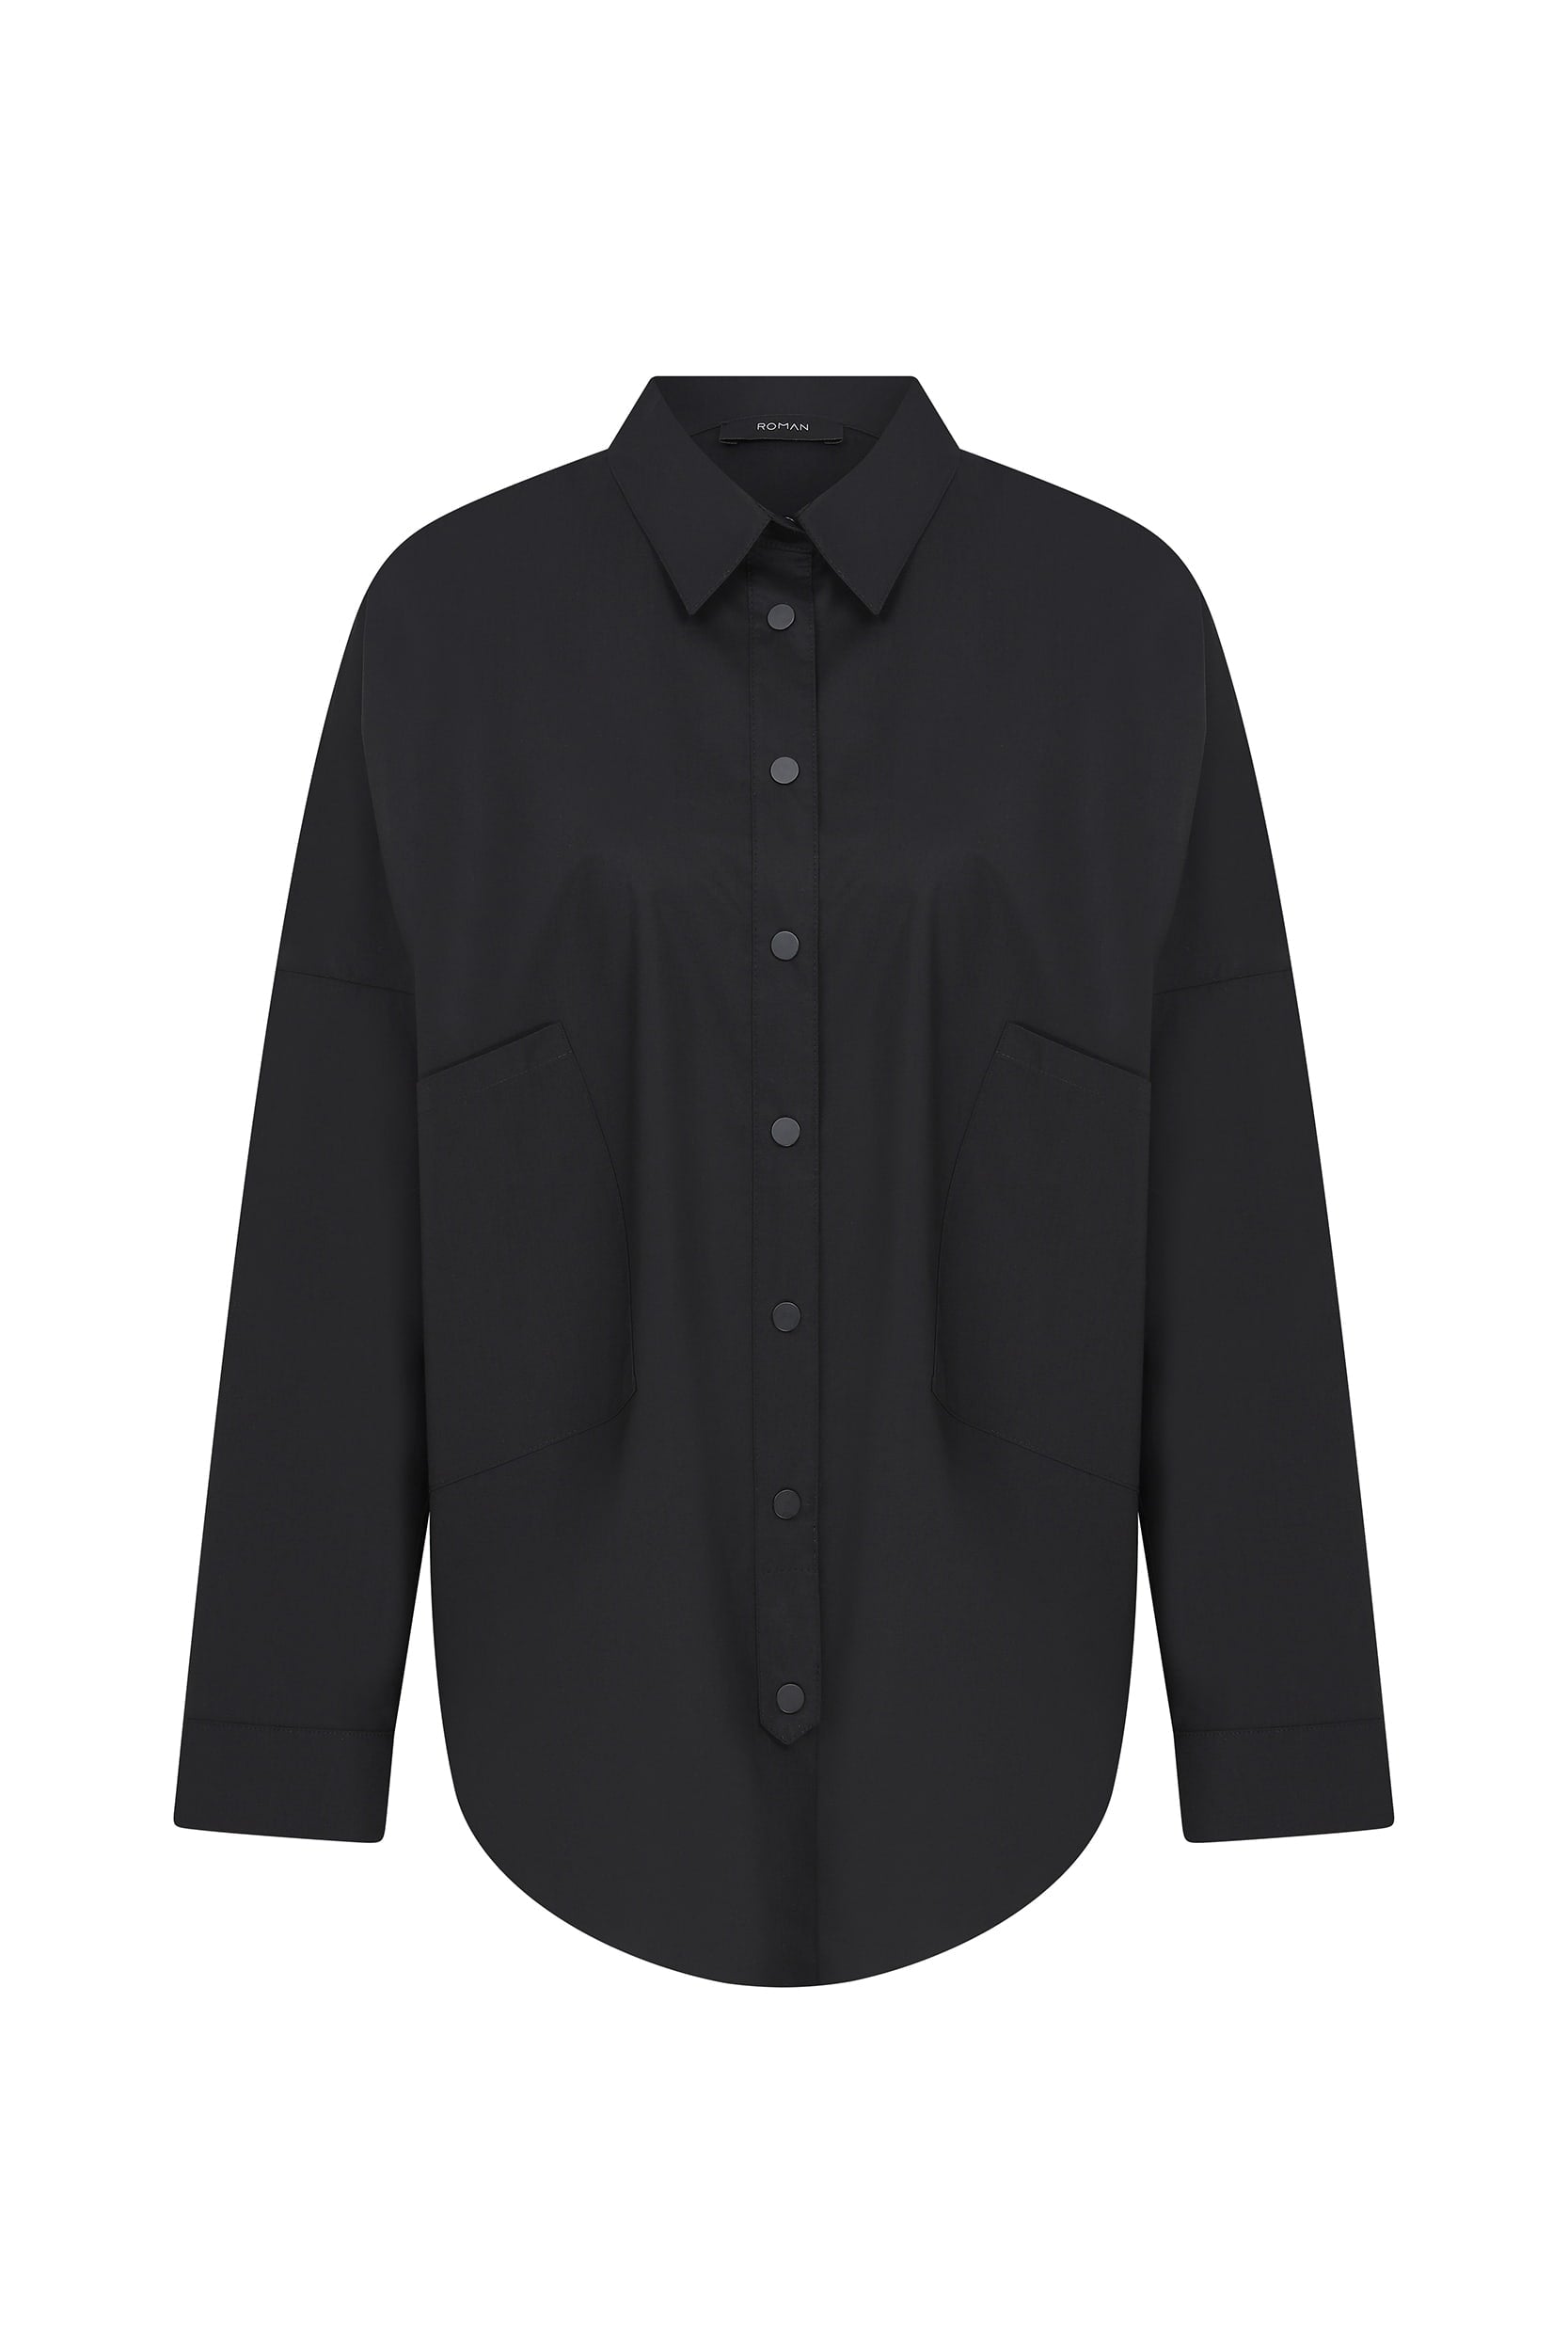 Retro Black Long Sleeve Shirt -- [BLACK]